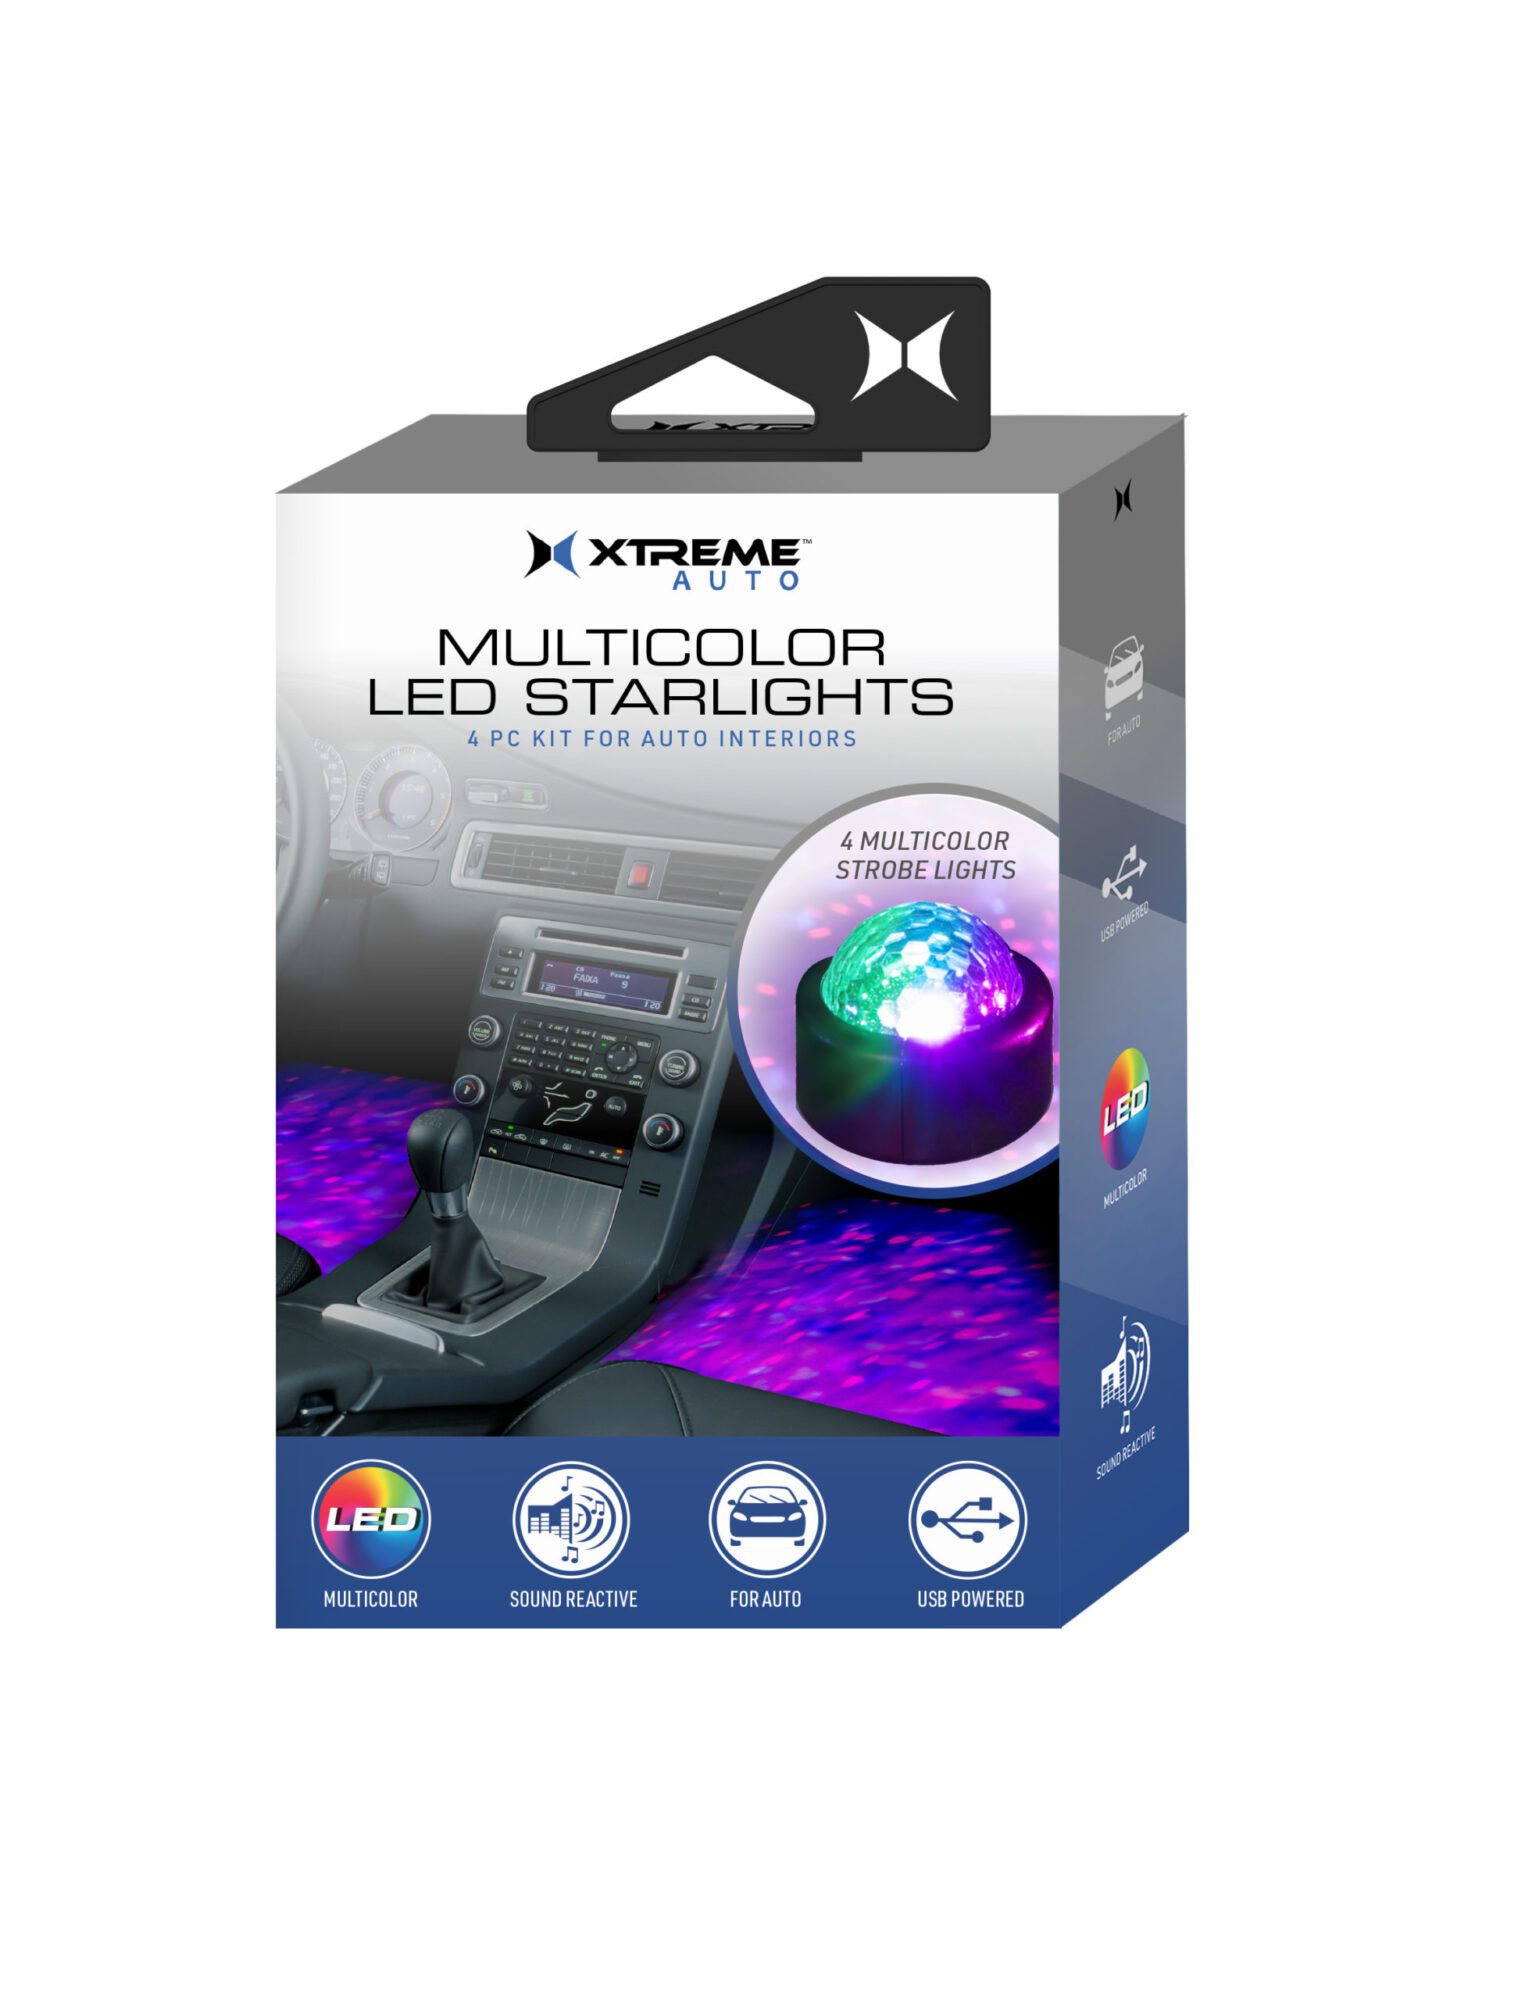 Auto Multicolor LED Star Lights, 4 piece kit